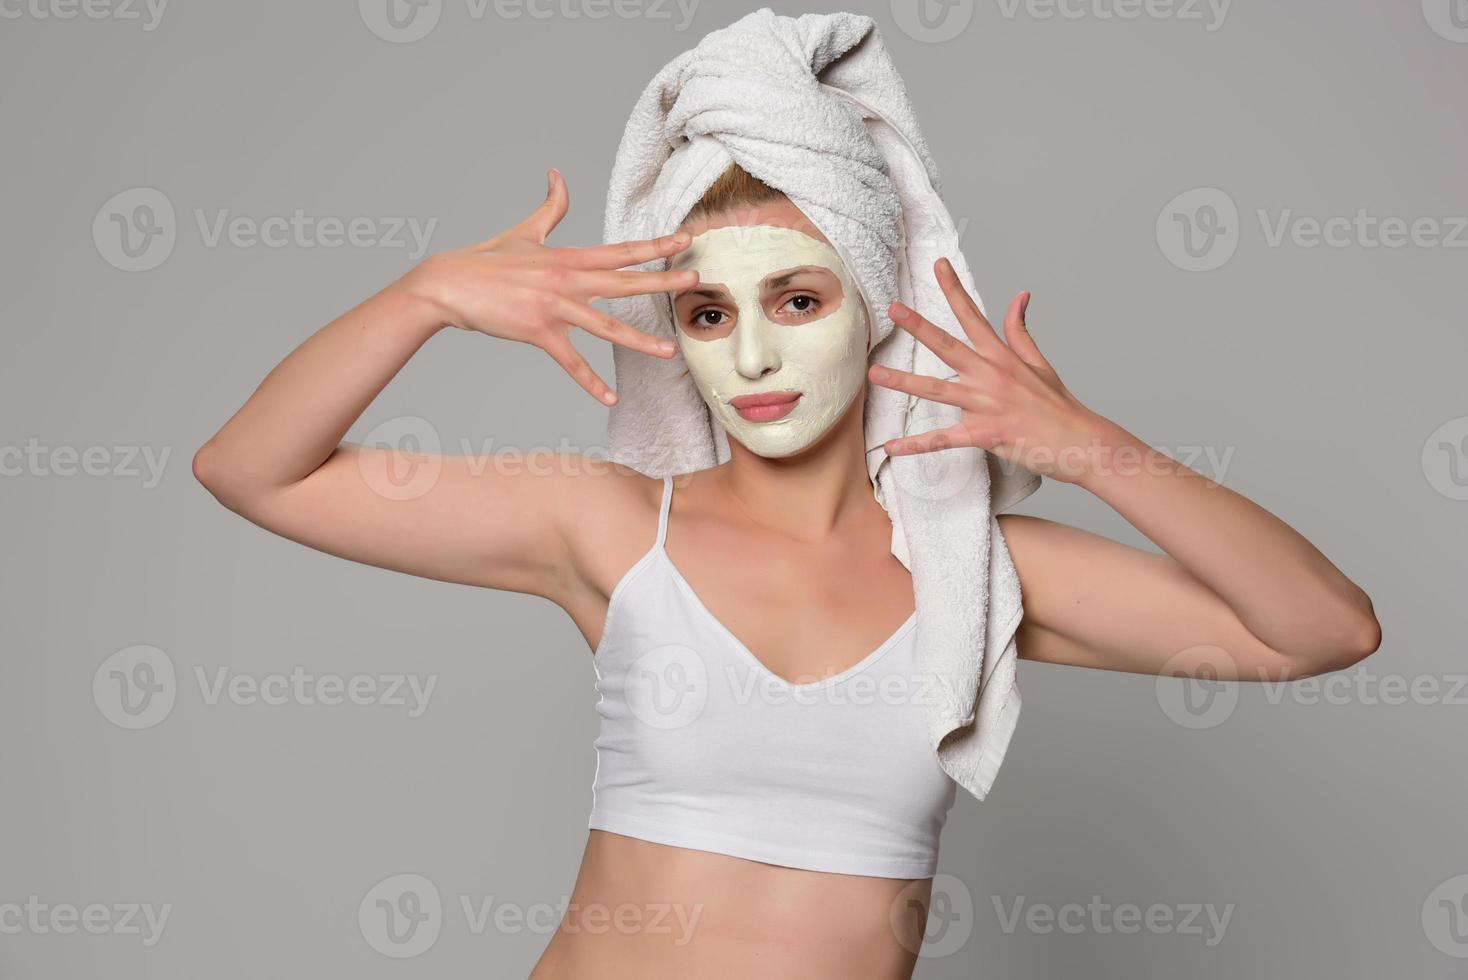 bela modelo feminina com toalha no ouvido e máscara cosmética facial branca no rosto. conceito cosmético de beleza. isolado em fundo cinza. foto